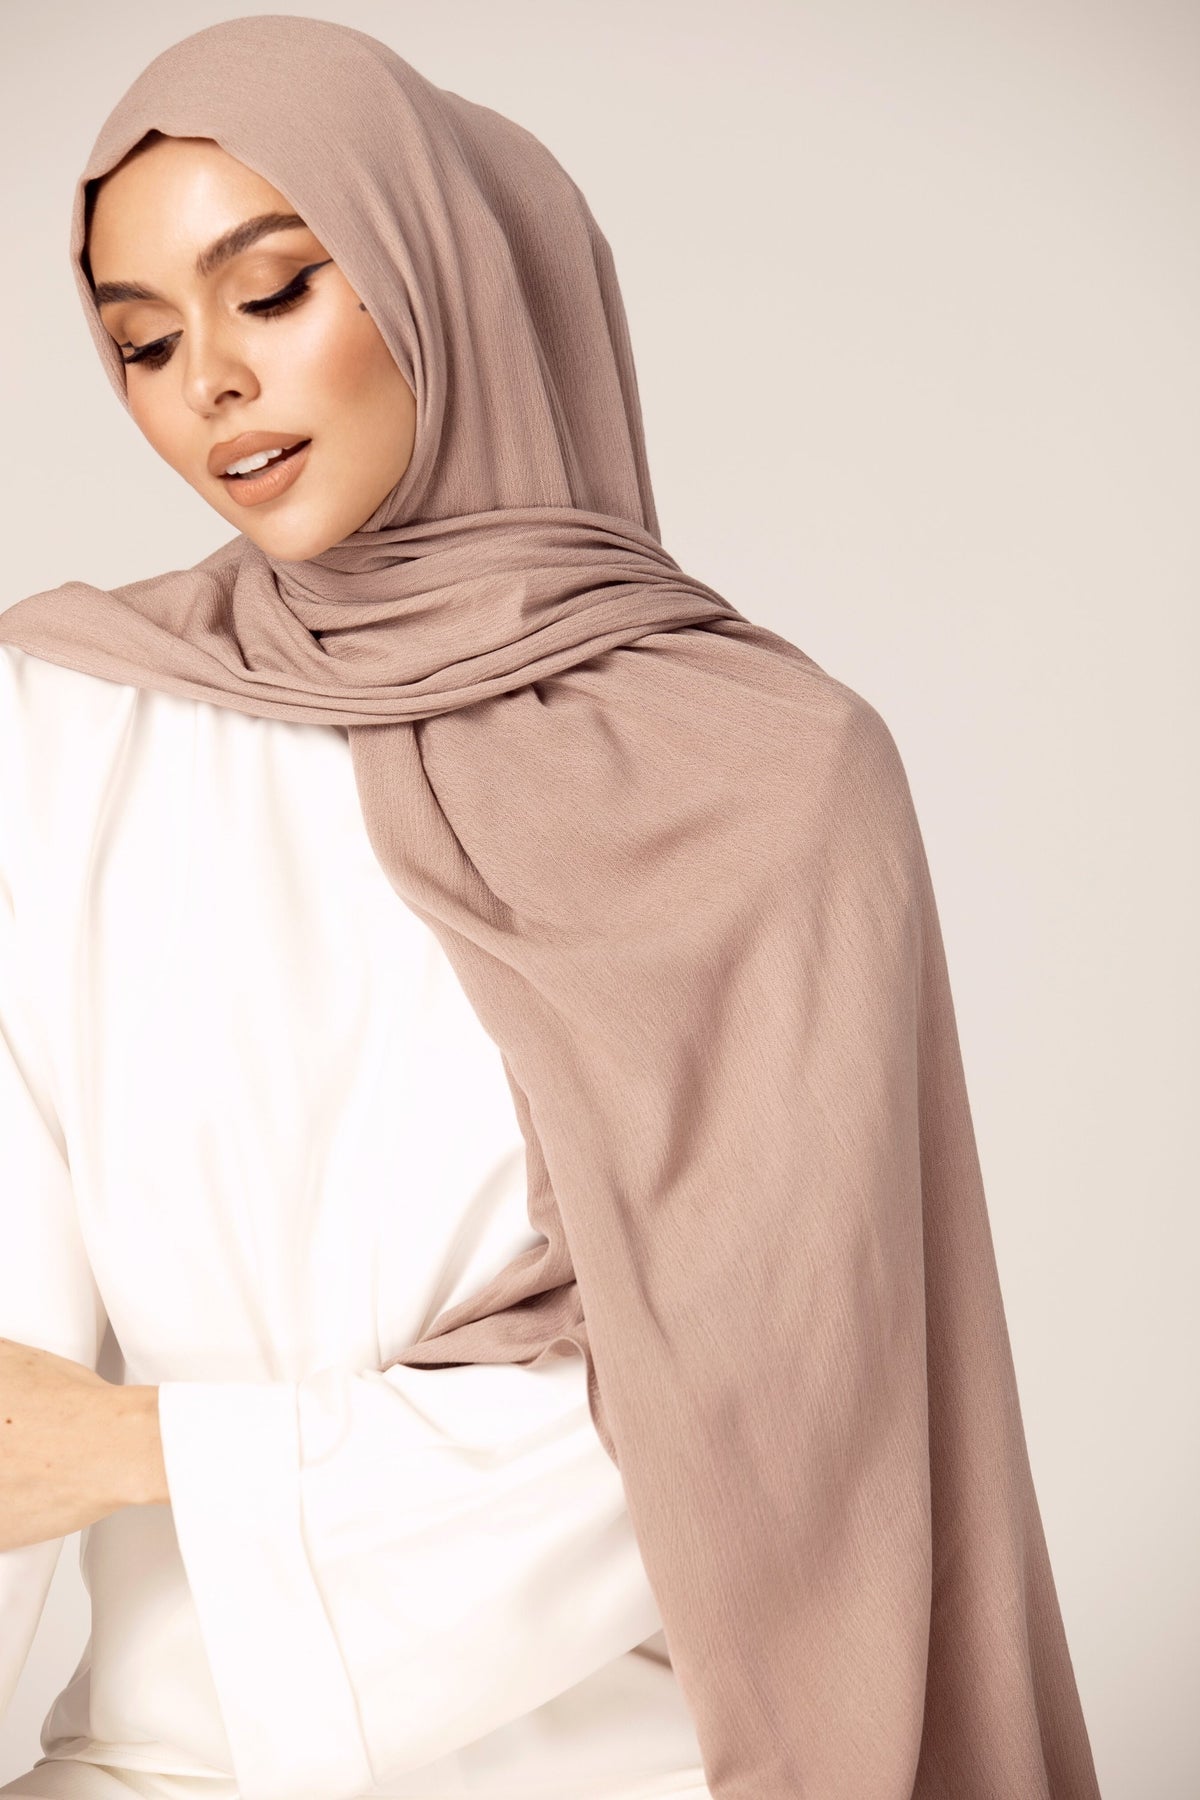 Premium Rayon Hijab - Nude Brown epschoolboard 